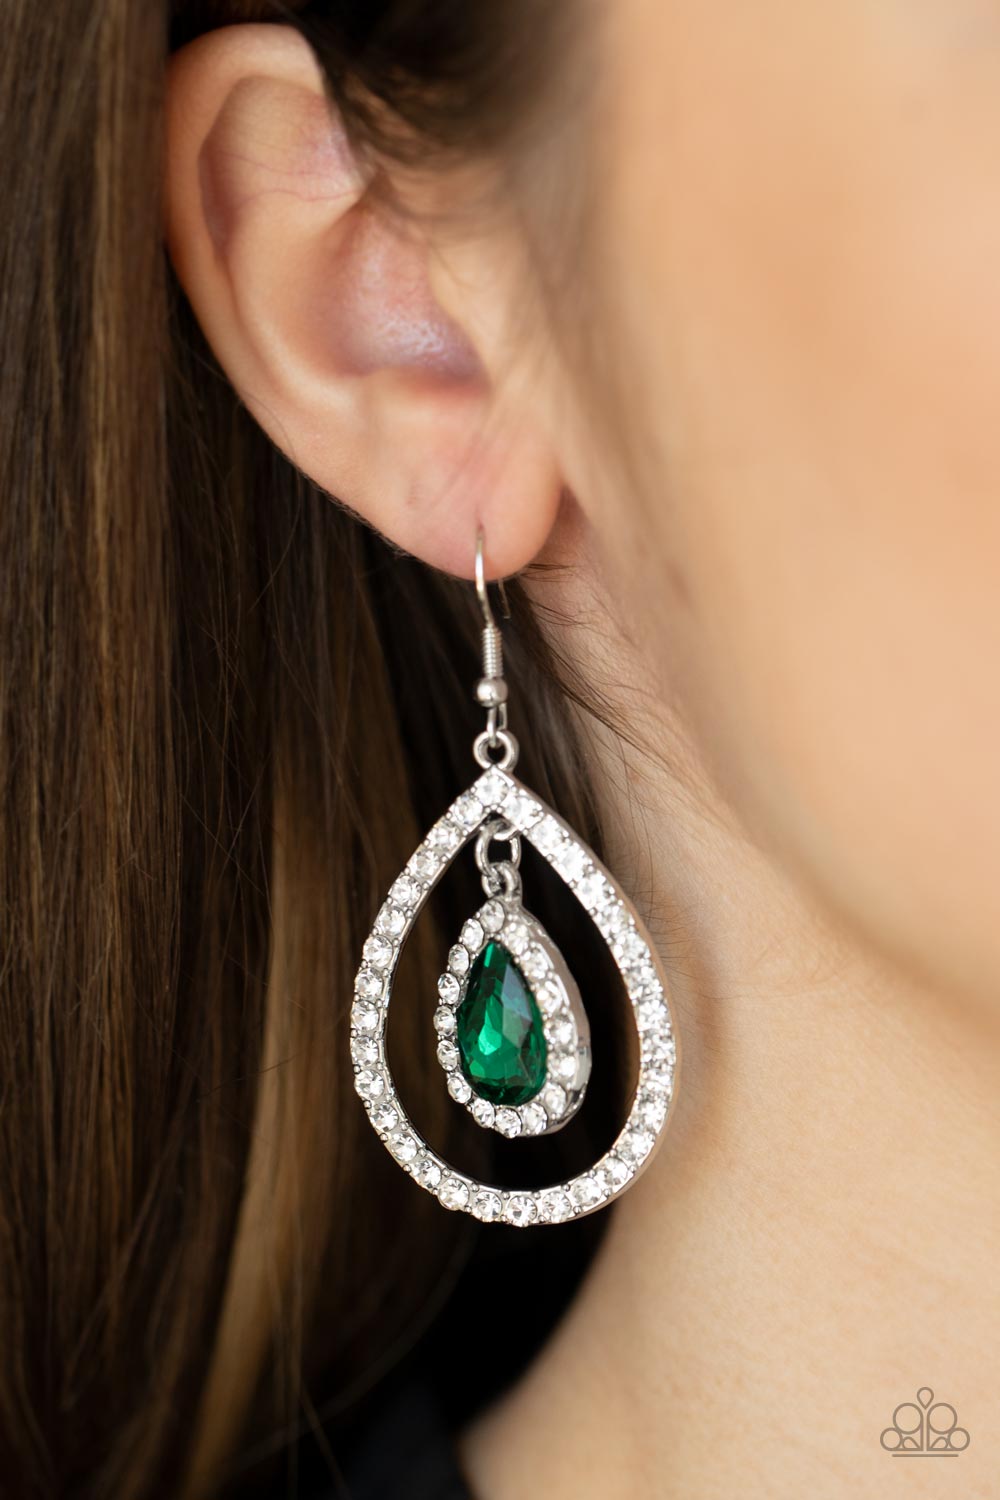 Blushing Bride Green & White Rhinestone Earrings - Paparazzi Accessories- lightbox - CarasShop.com - $5 Jewelry by Cara Jewels